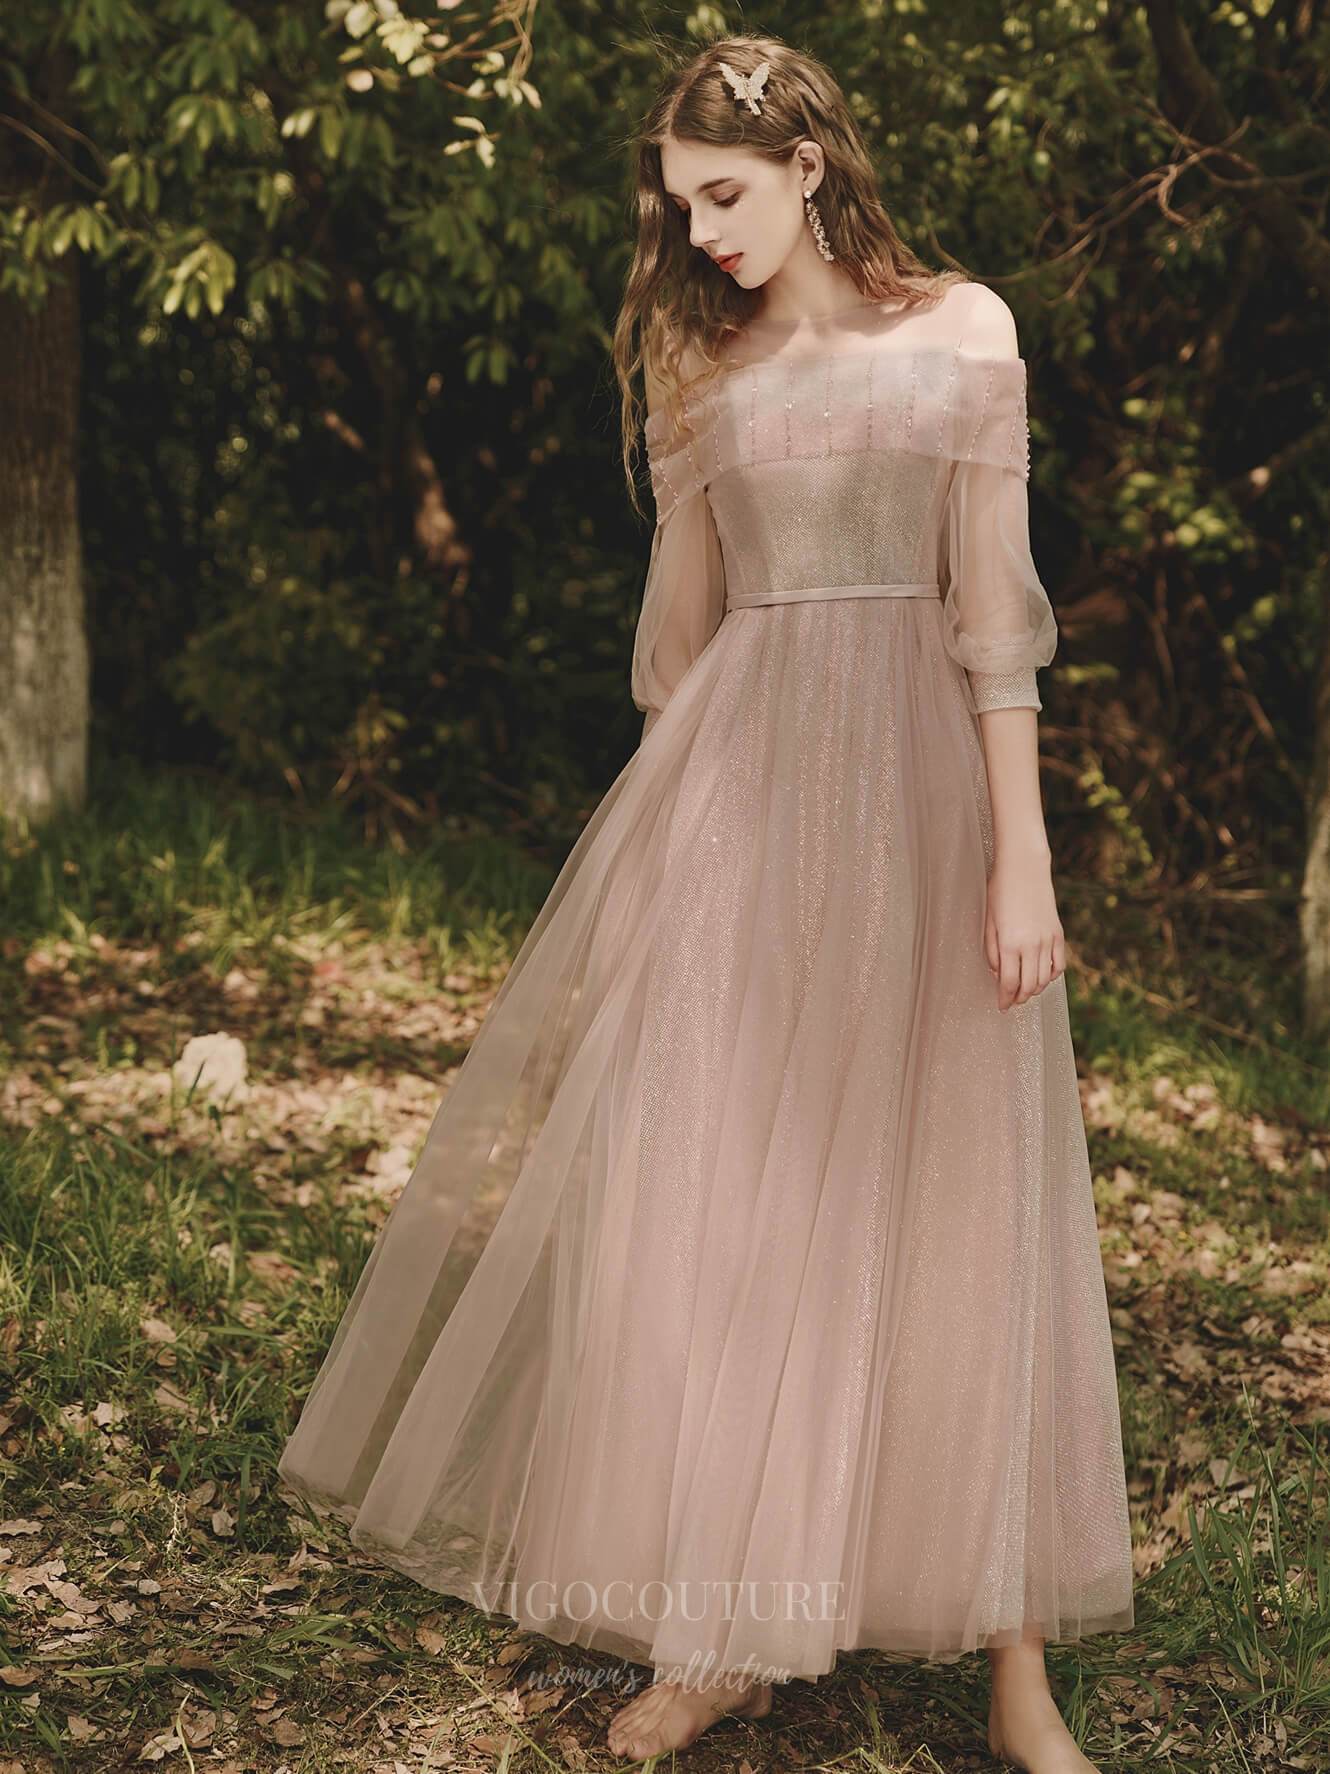 vigocouture-Blush Off the Shoulder 3/4 Sleeve Prom Dress 20703-Prom Dresses-vigocouture-